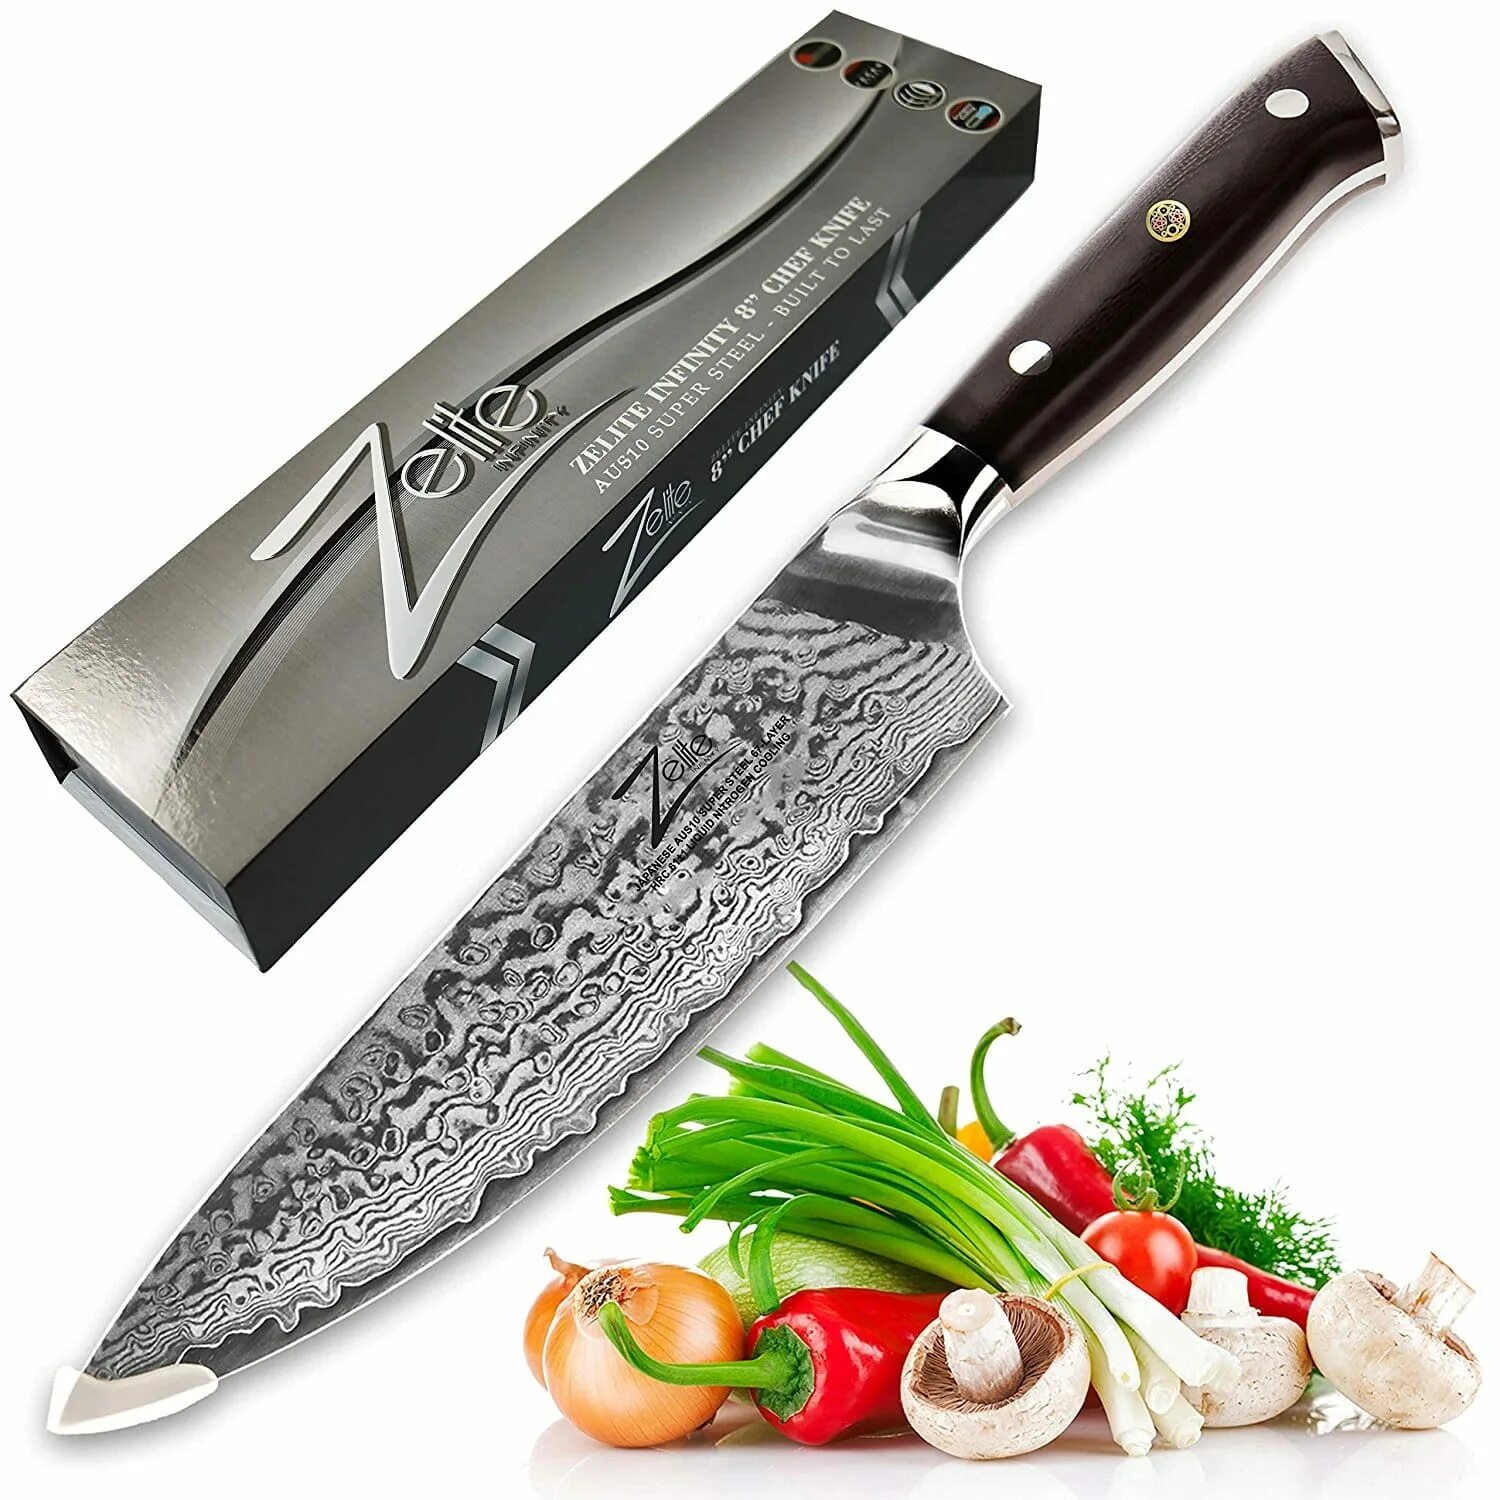 Недорогие кухонные ножи. Нож Chef Knife. Кузнец ножи шеф нож vg10 Elmax. Нож шеф Kiyomi Japan. Нож кухонный Chef Knife.